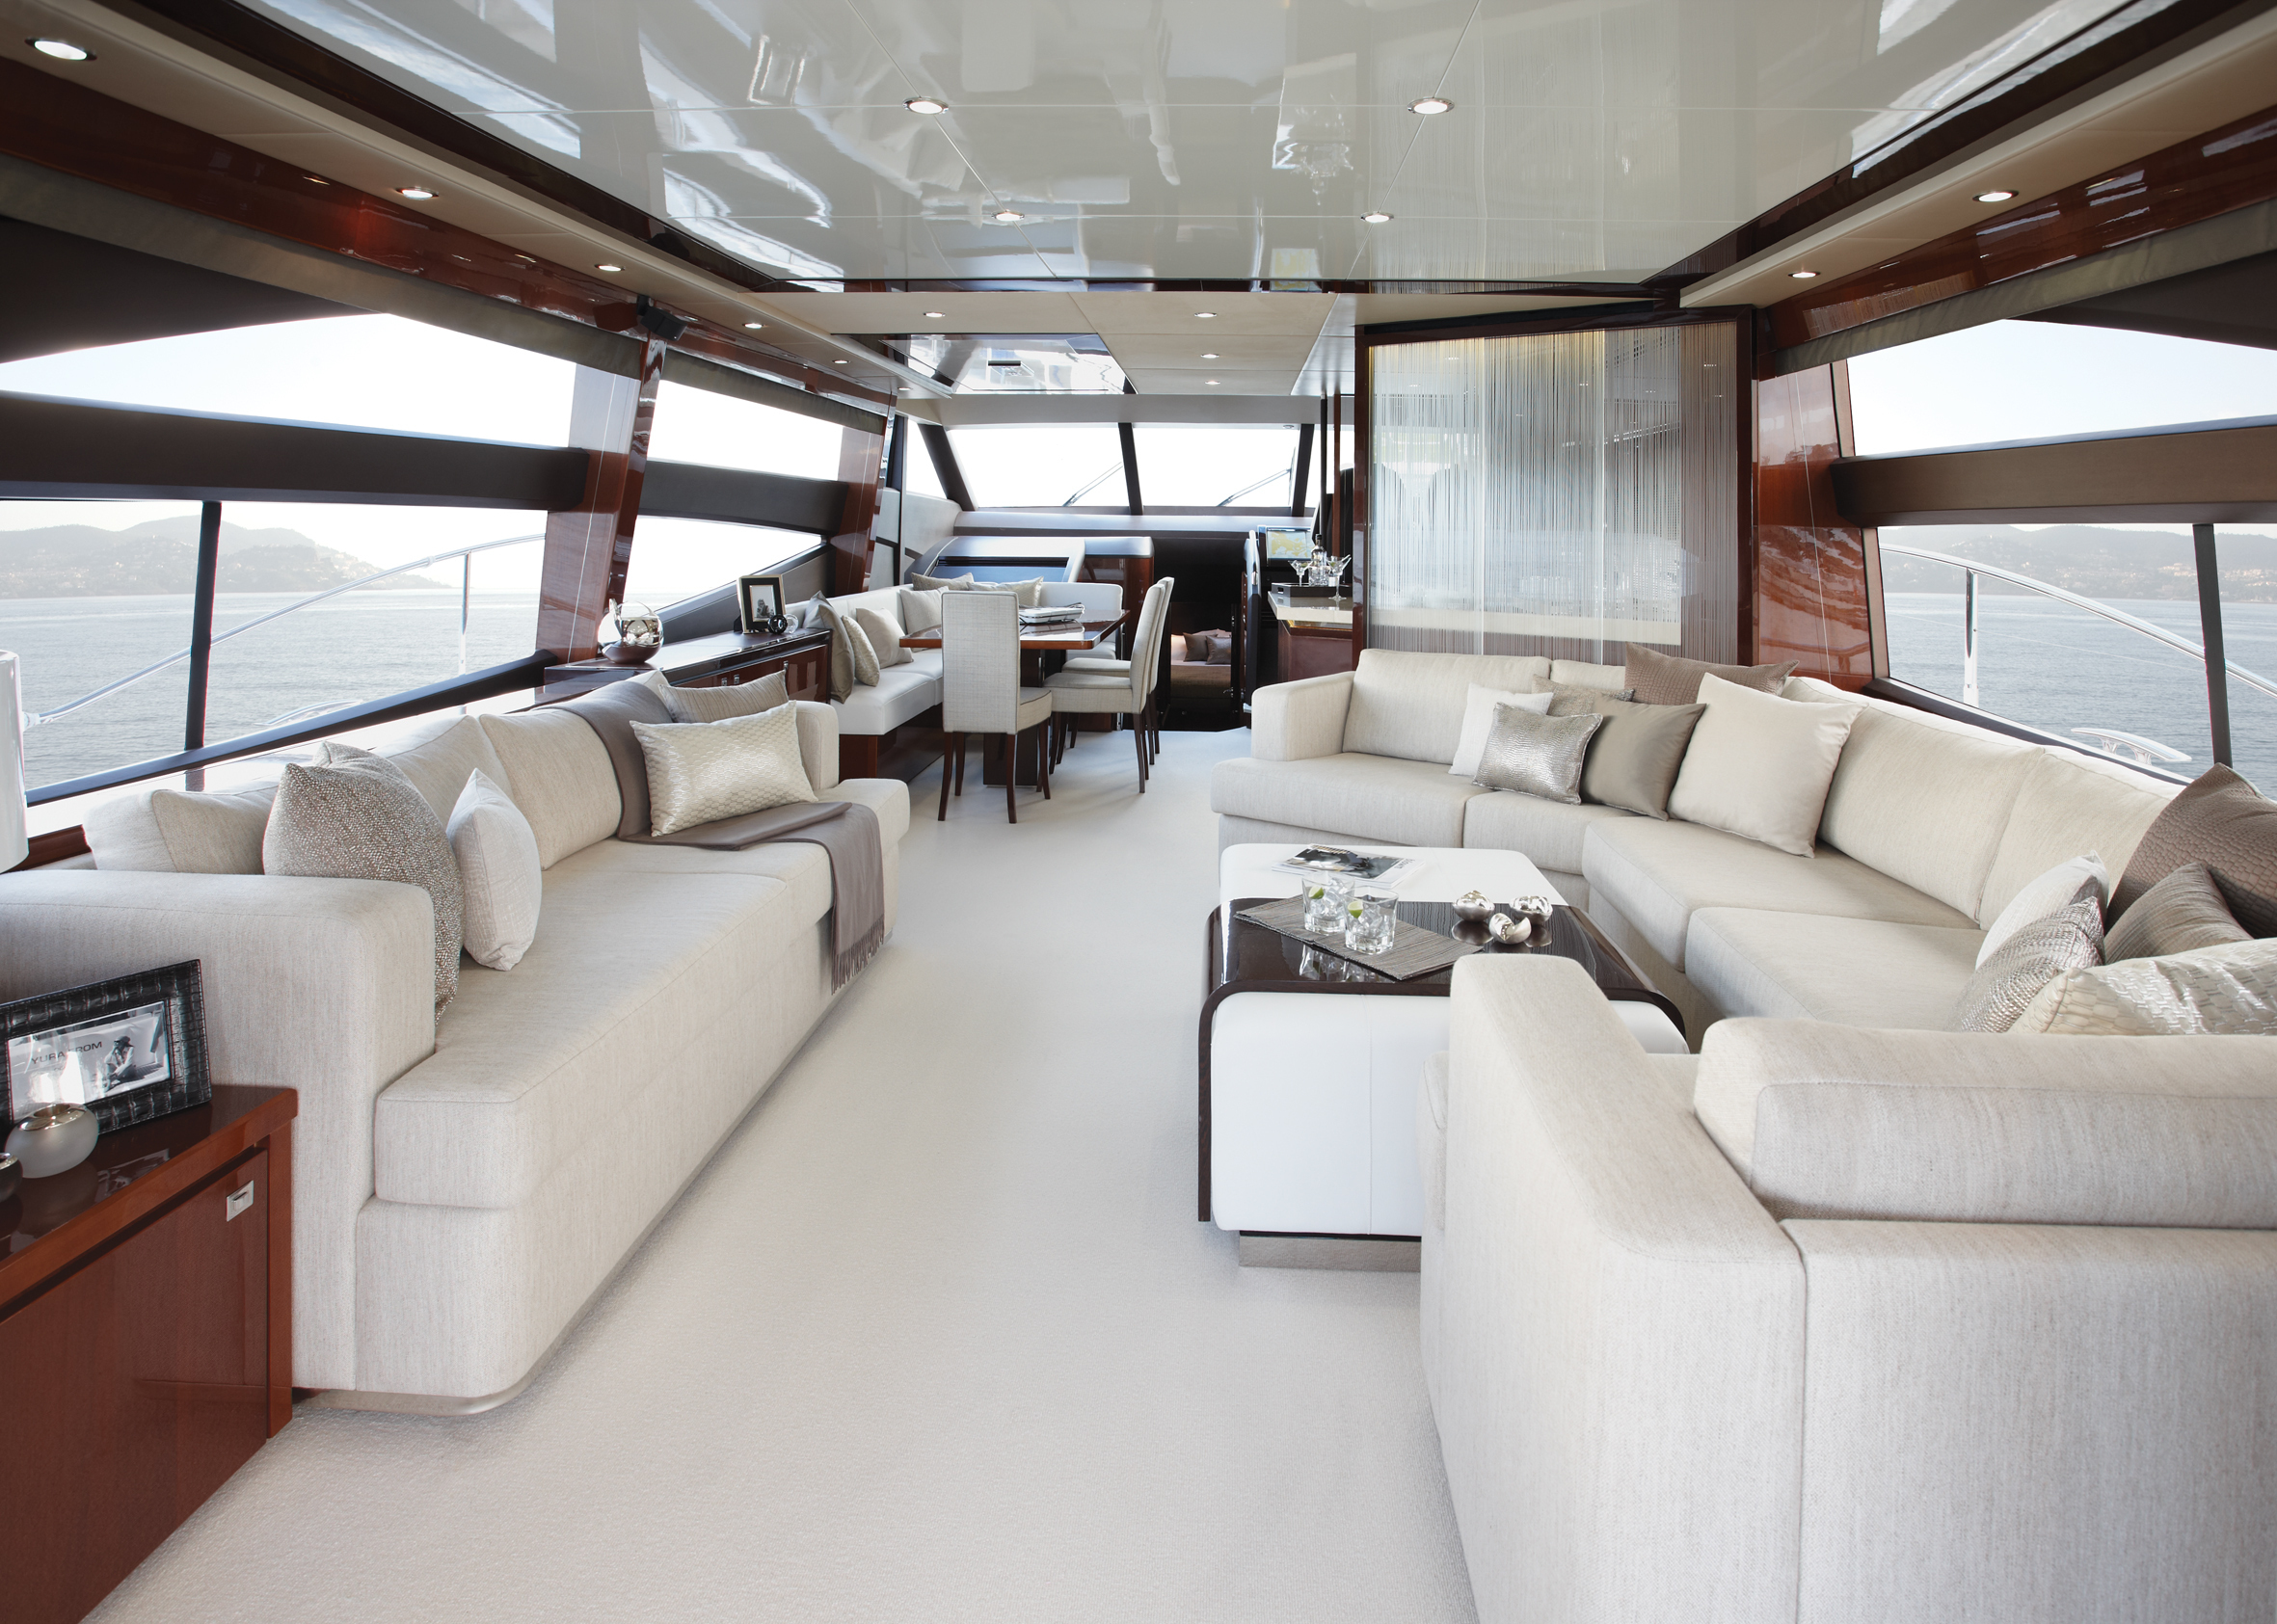 luxury, style, vehicles, yacht, design, interior, room, saloon 1080p